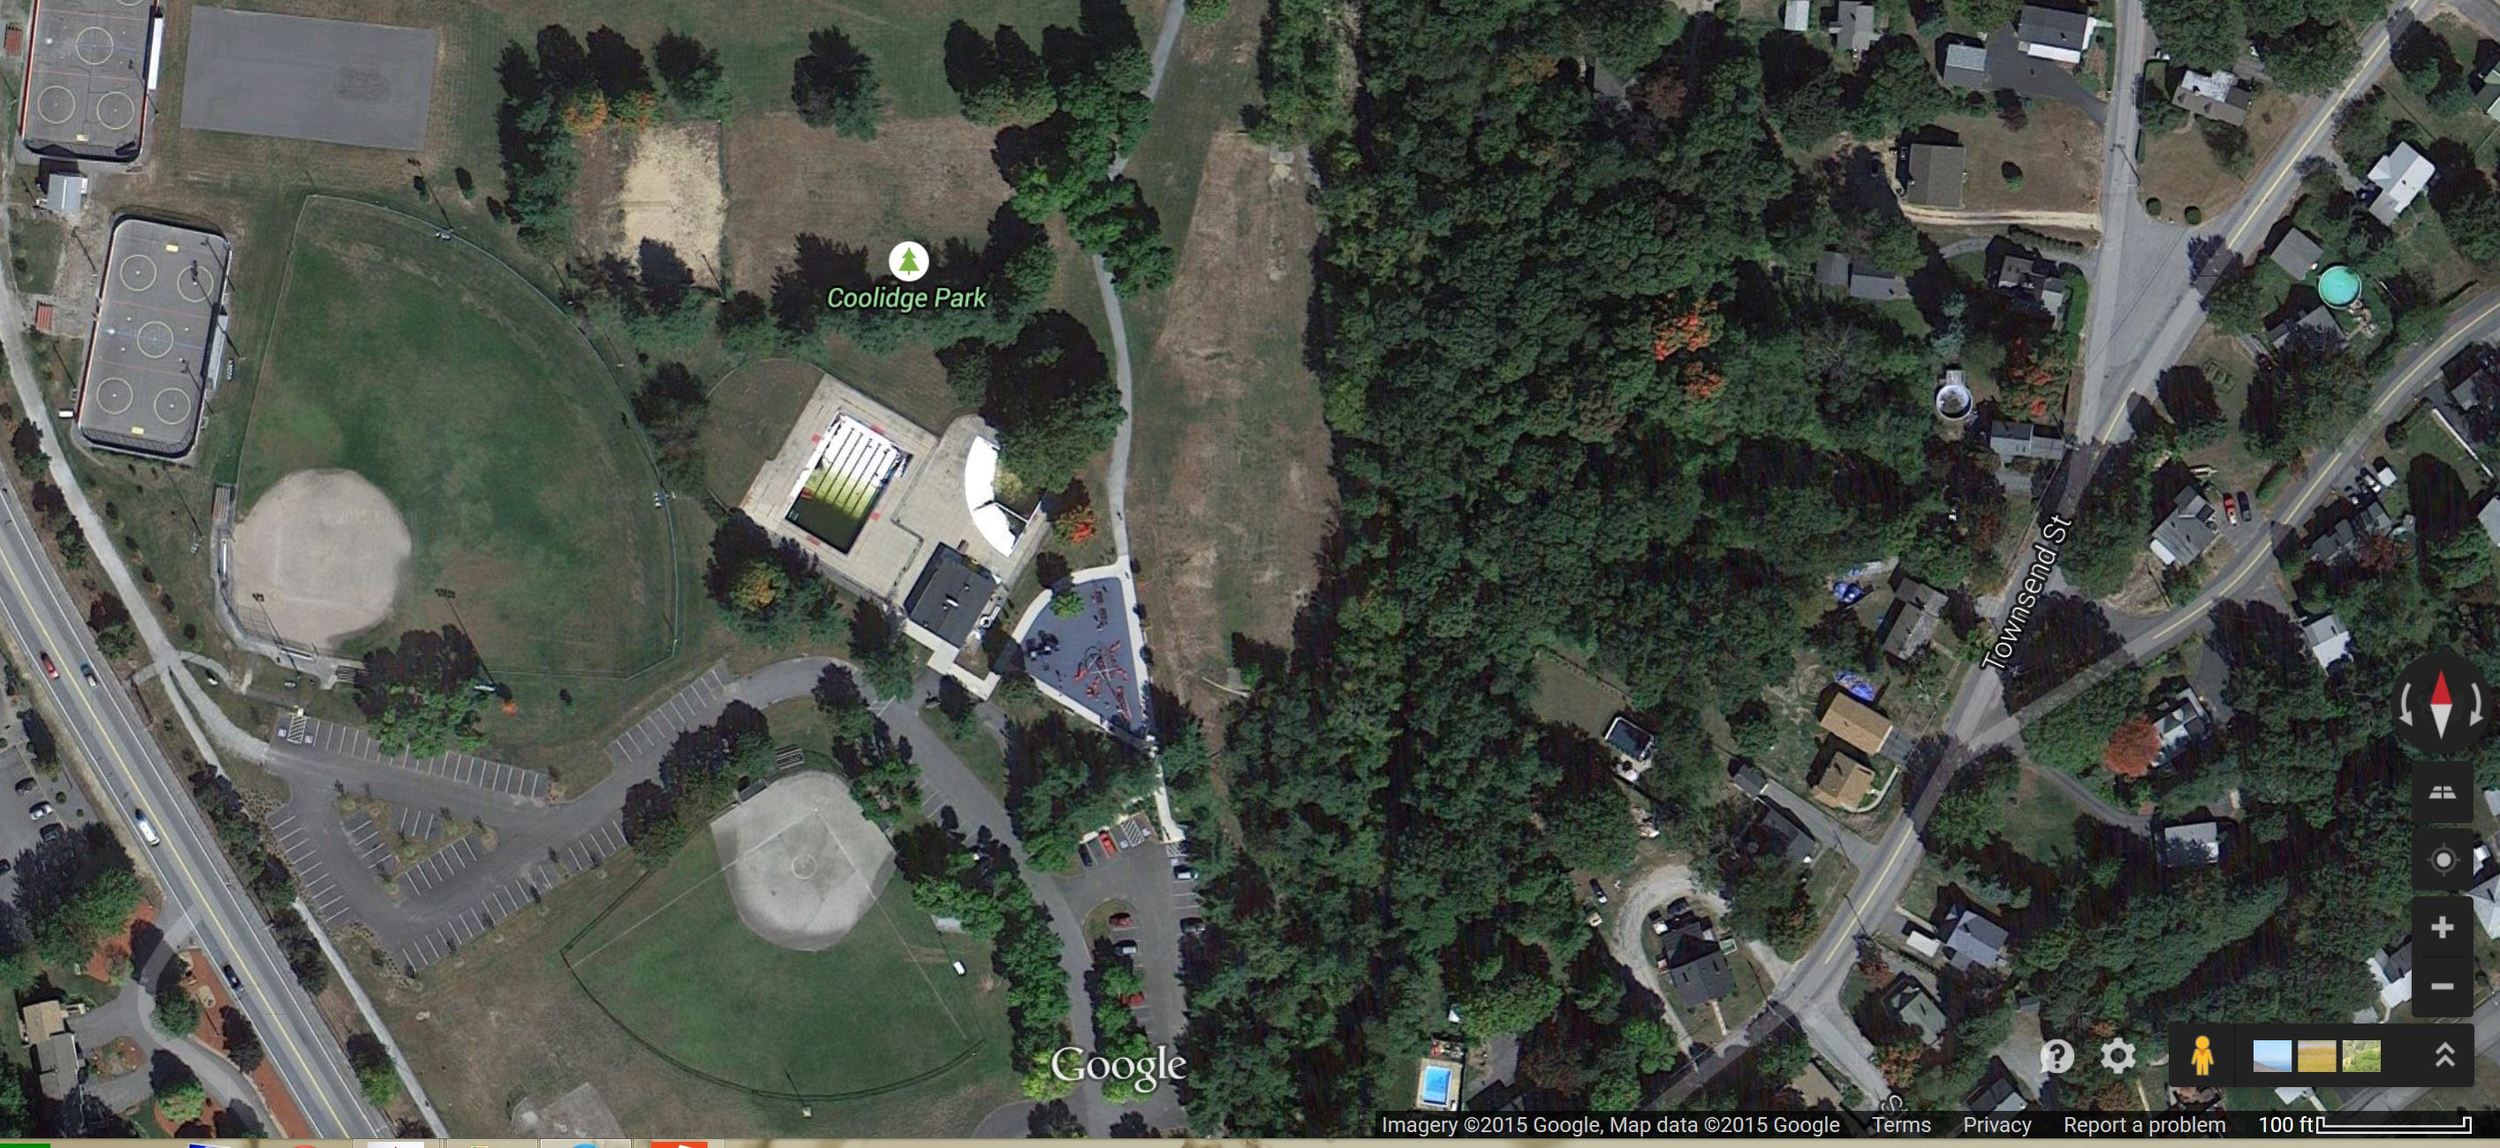 coolidge park google earth 5-16-15.JPG